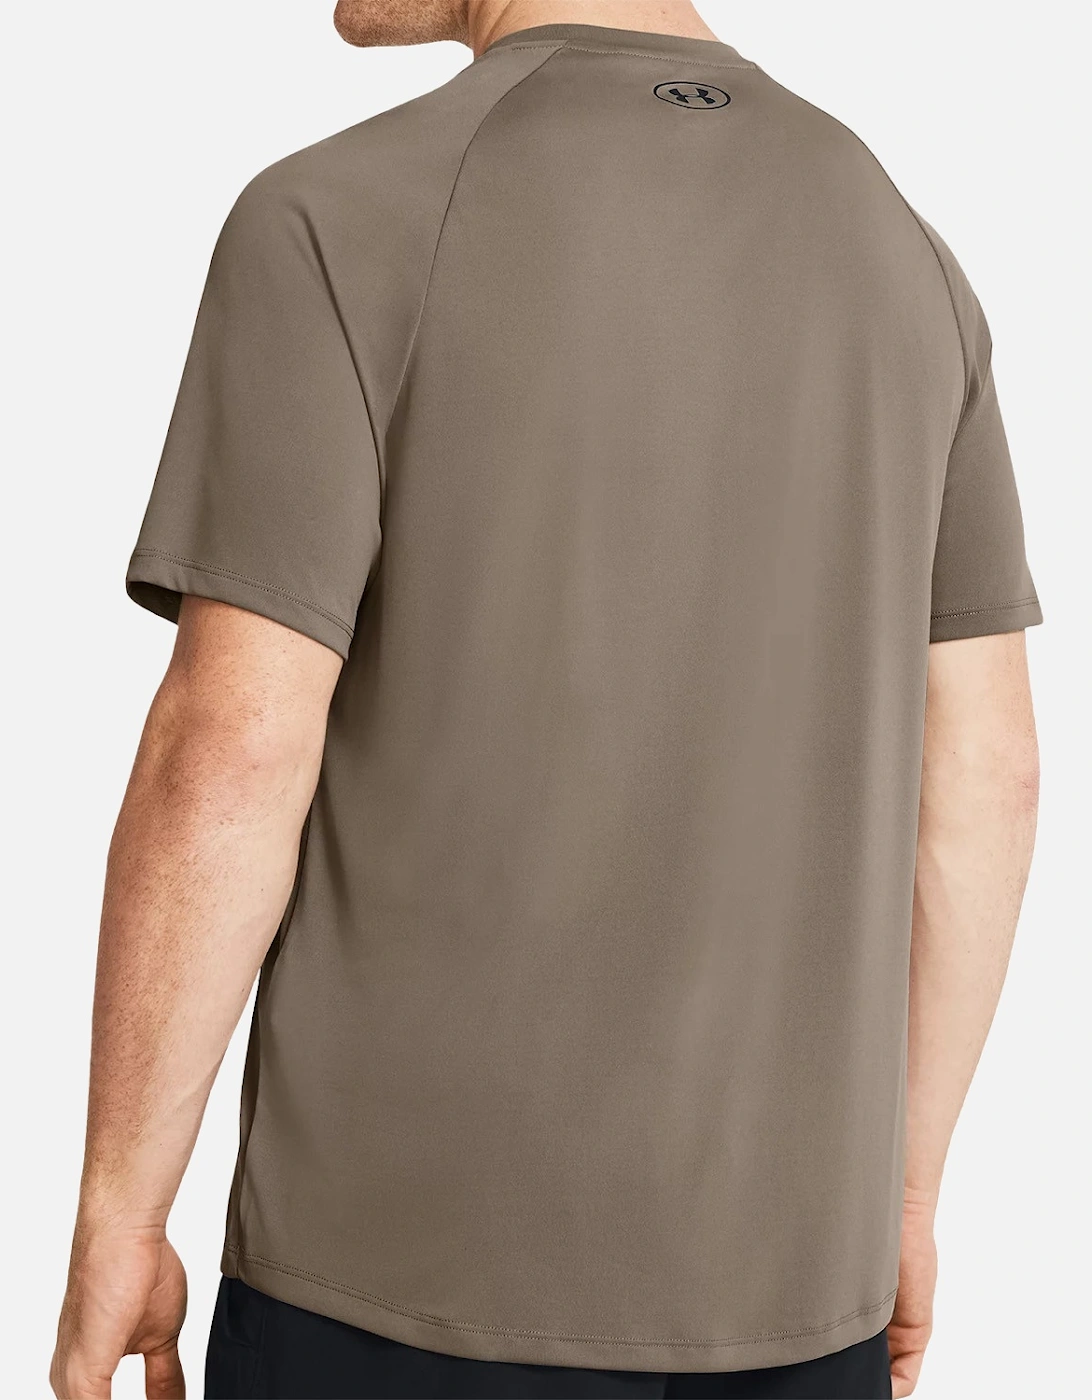 Mens Tech T-Shirt 2.0 (Taupe)